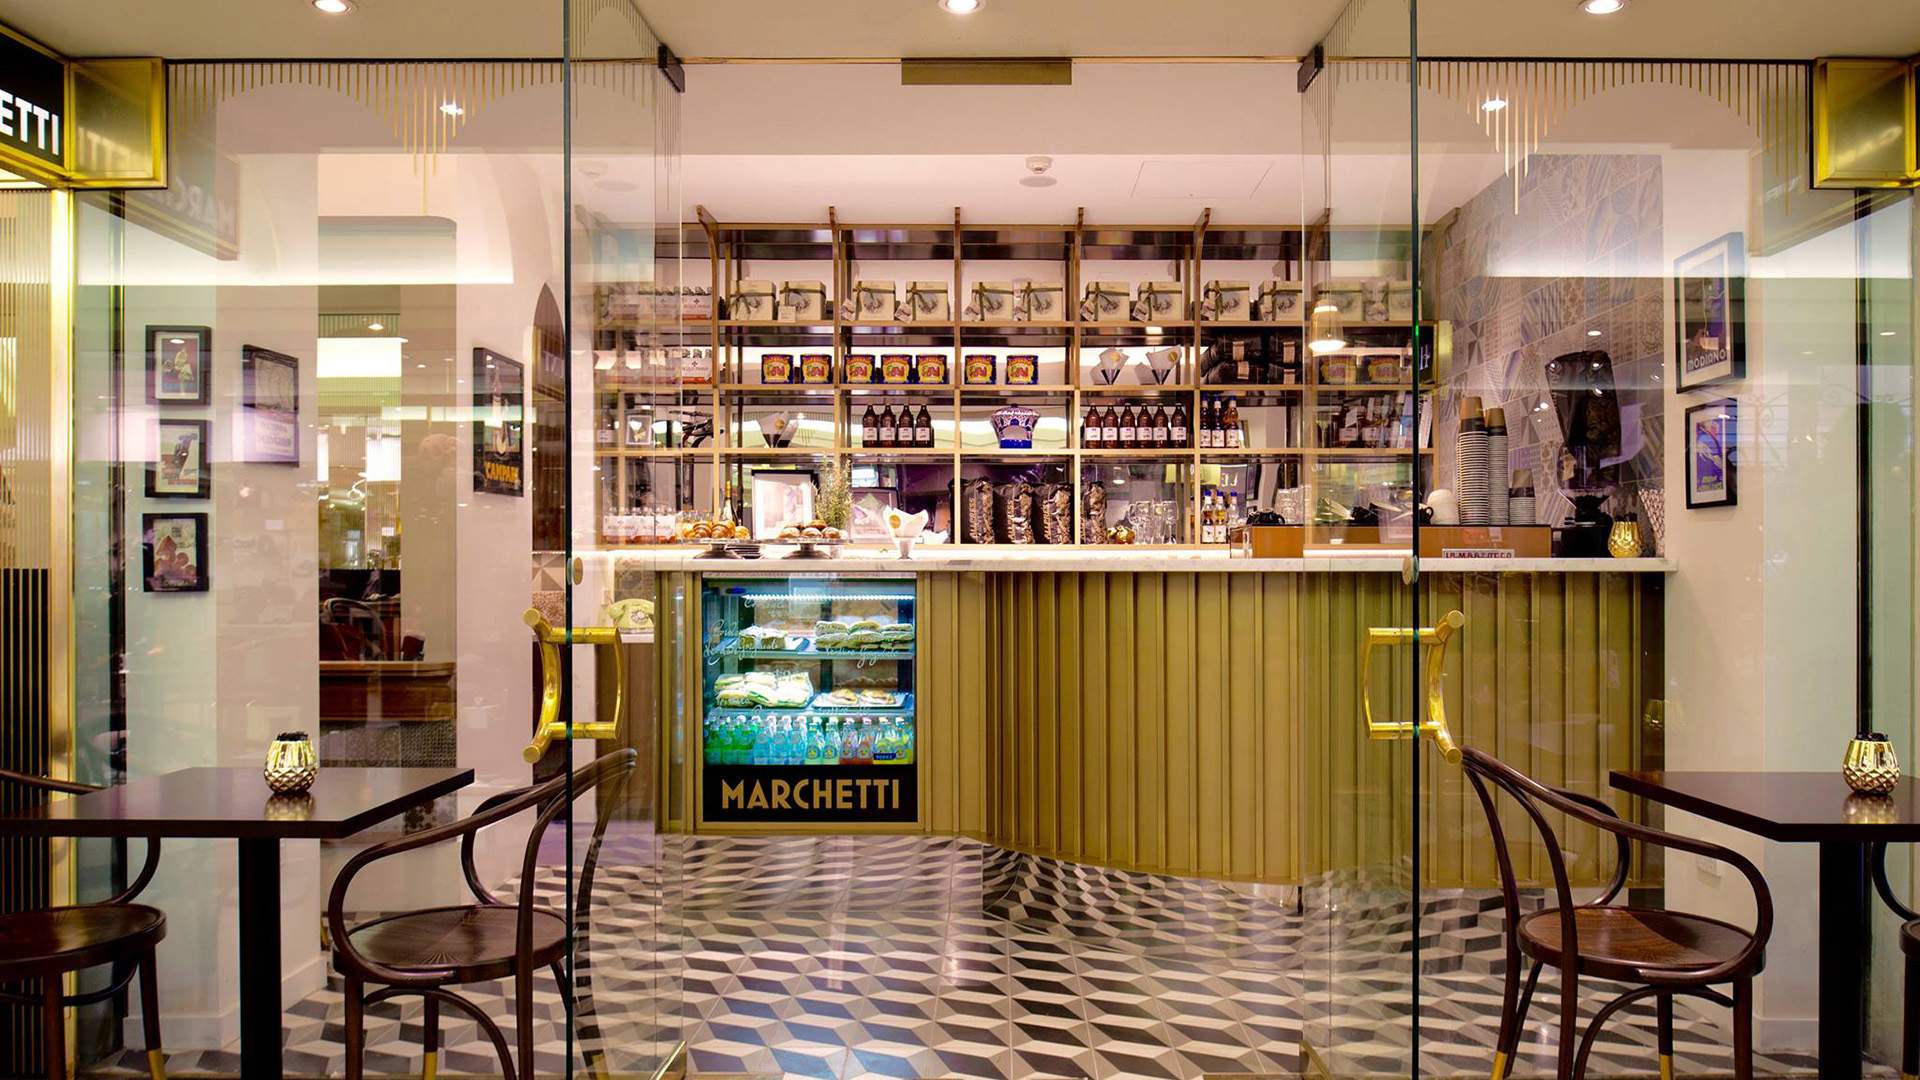 Marchetti Cafe and Wine Bar